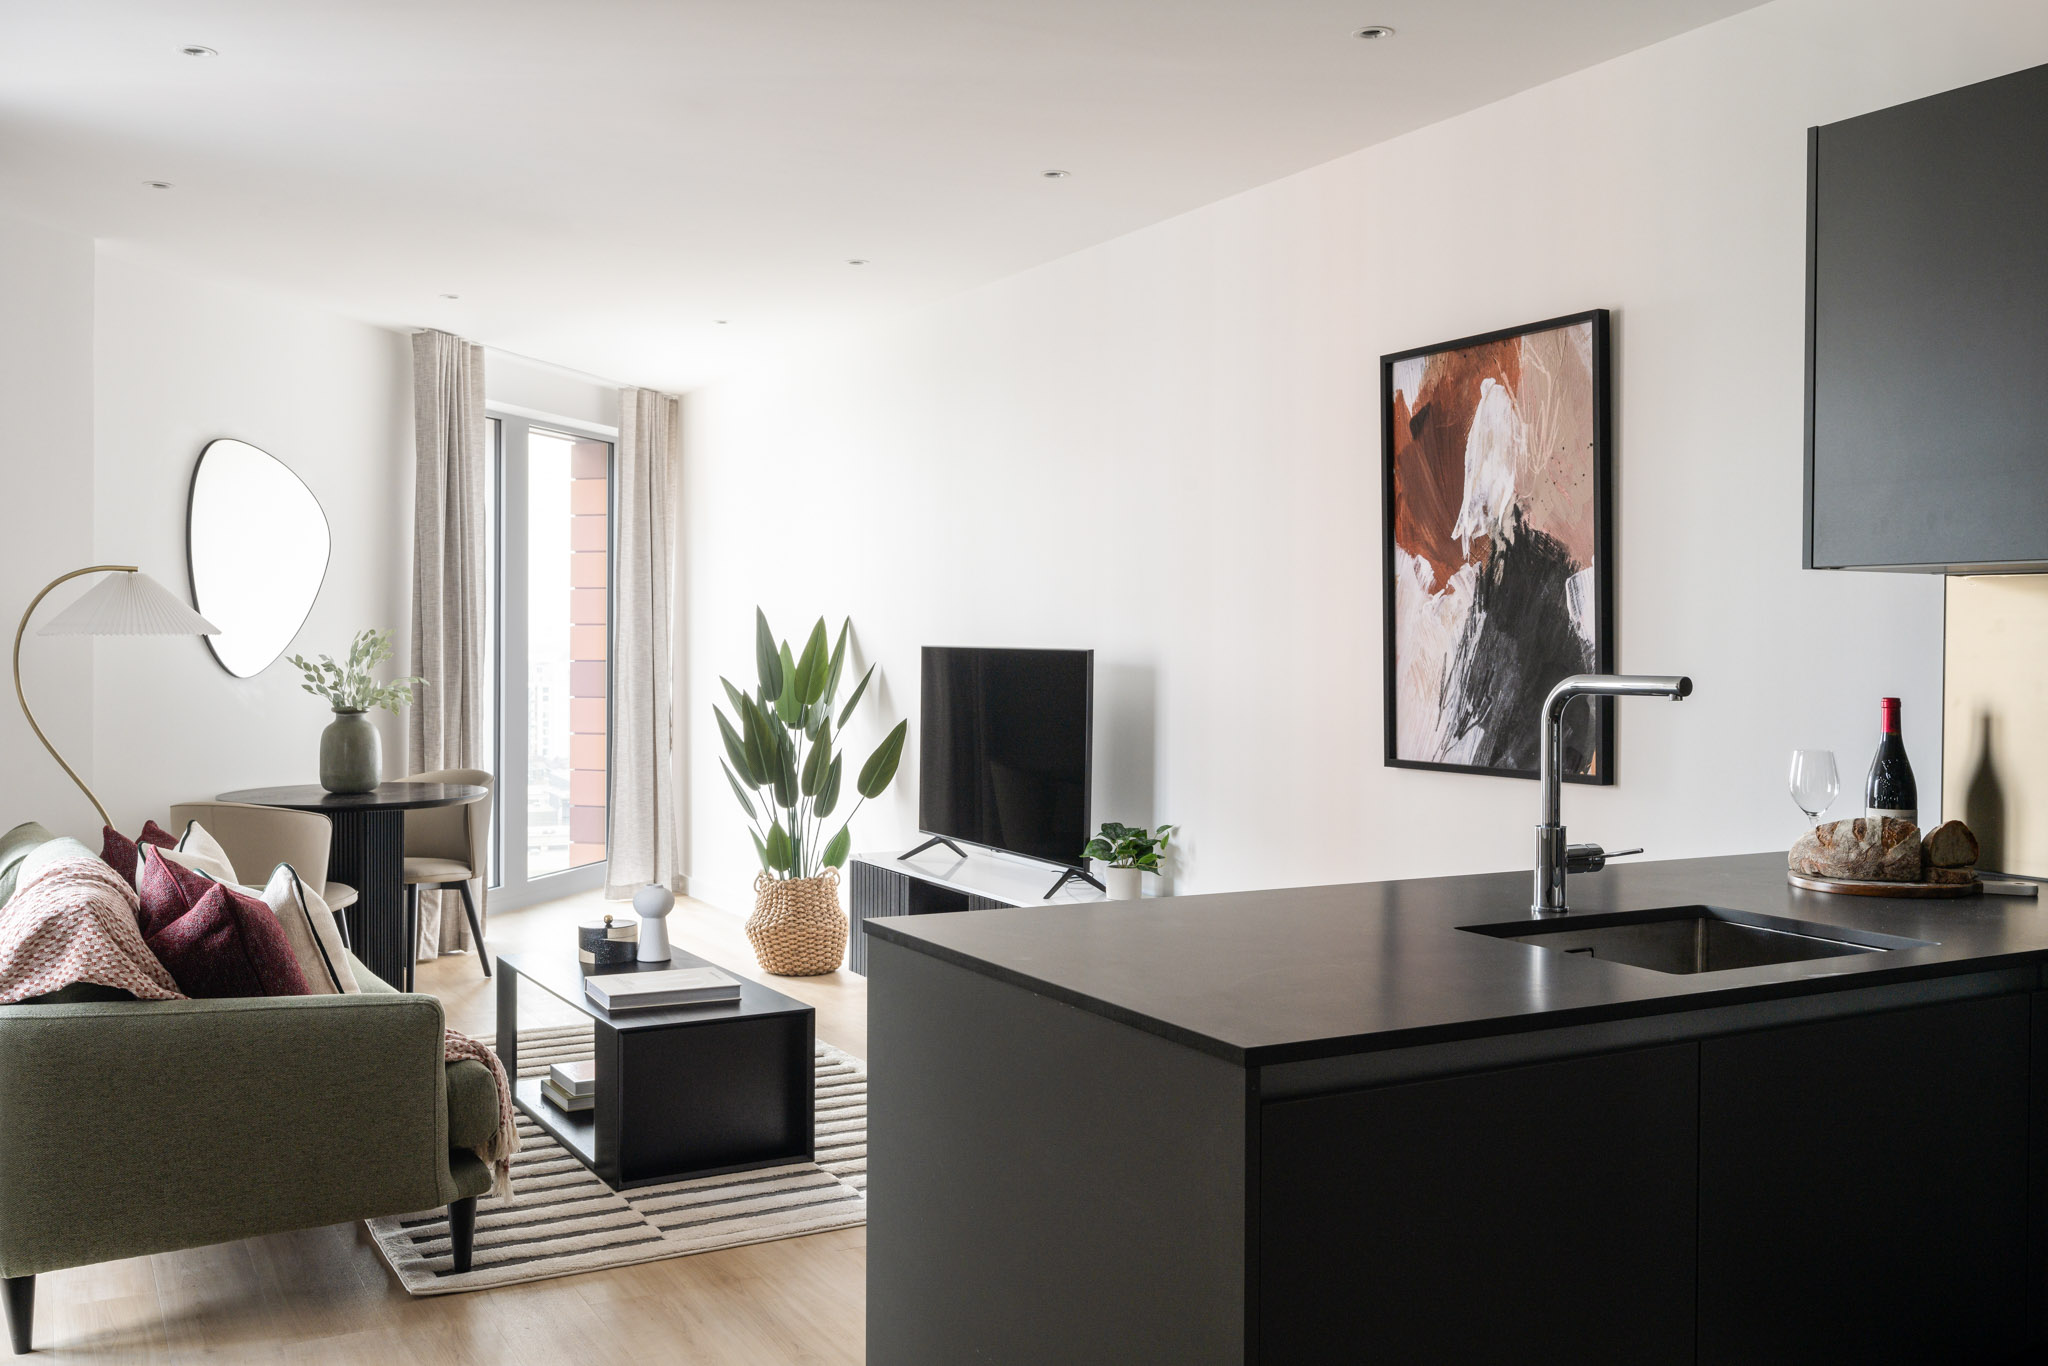 Kitchen - Two Bedroom Apartment - Urban rest Battersea Apartments - London - Urban Rest